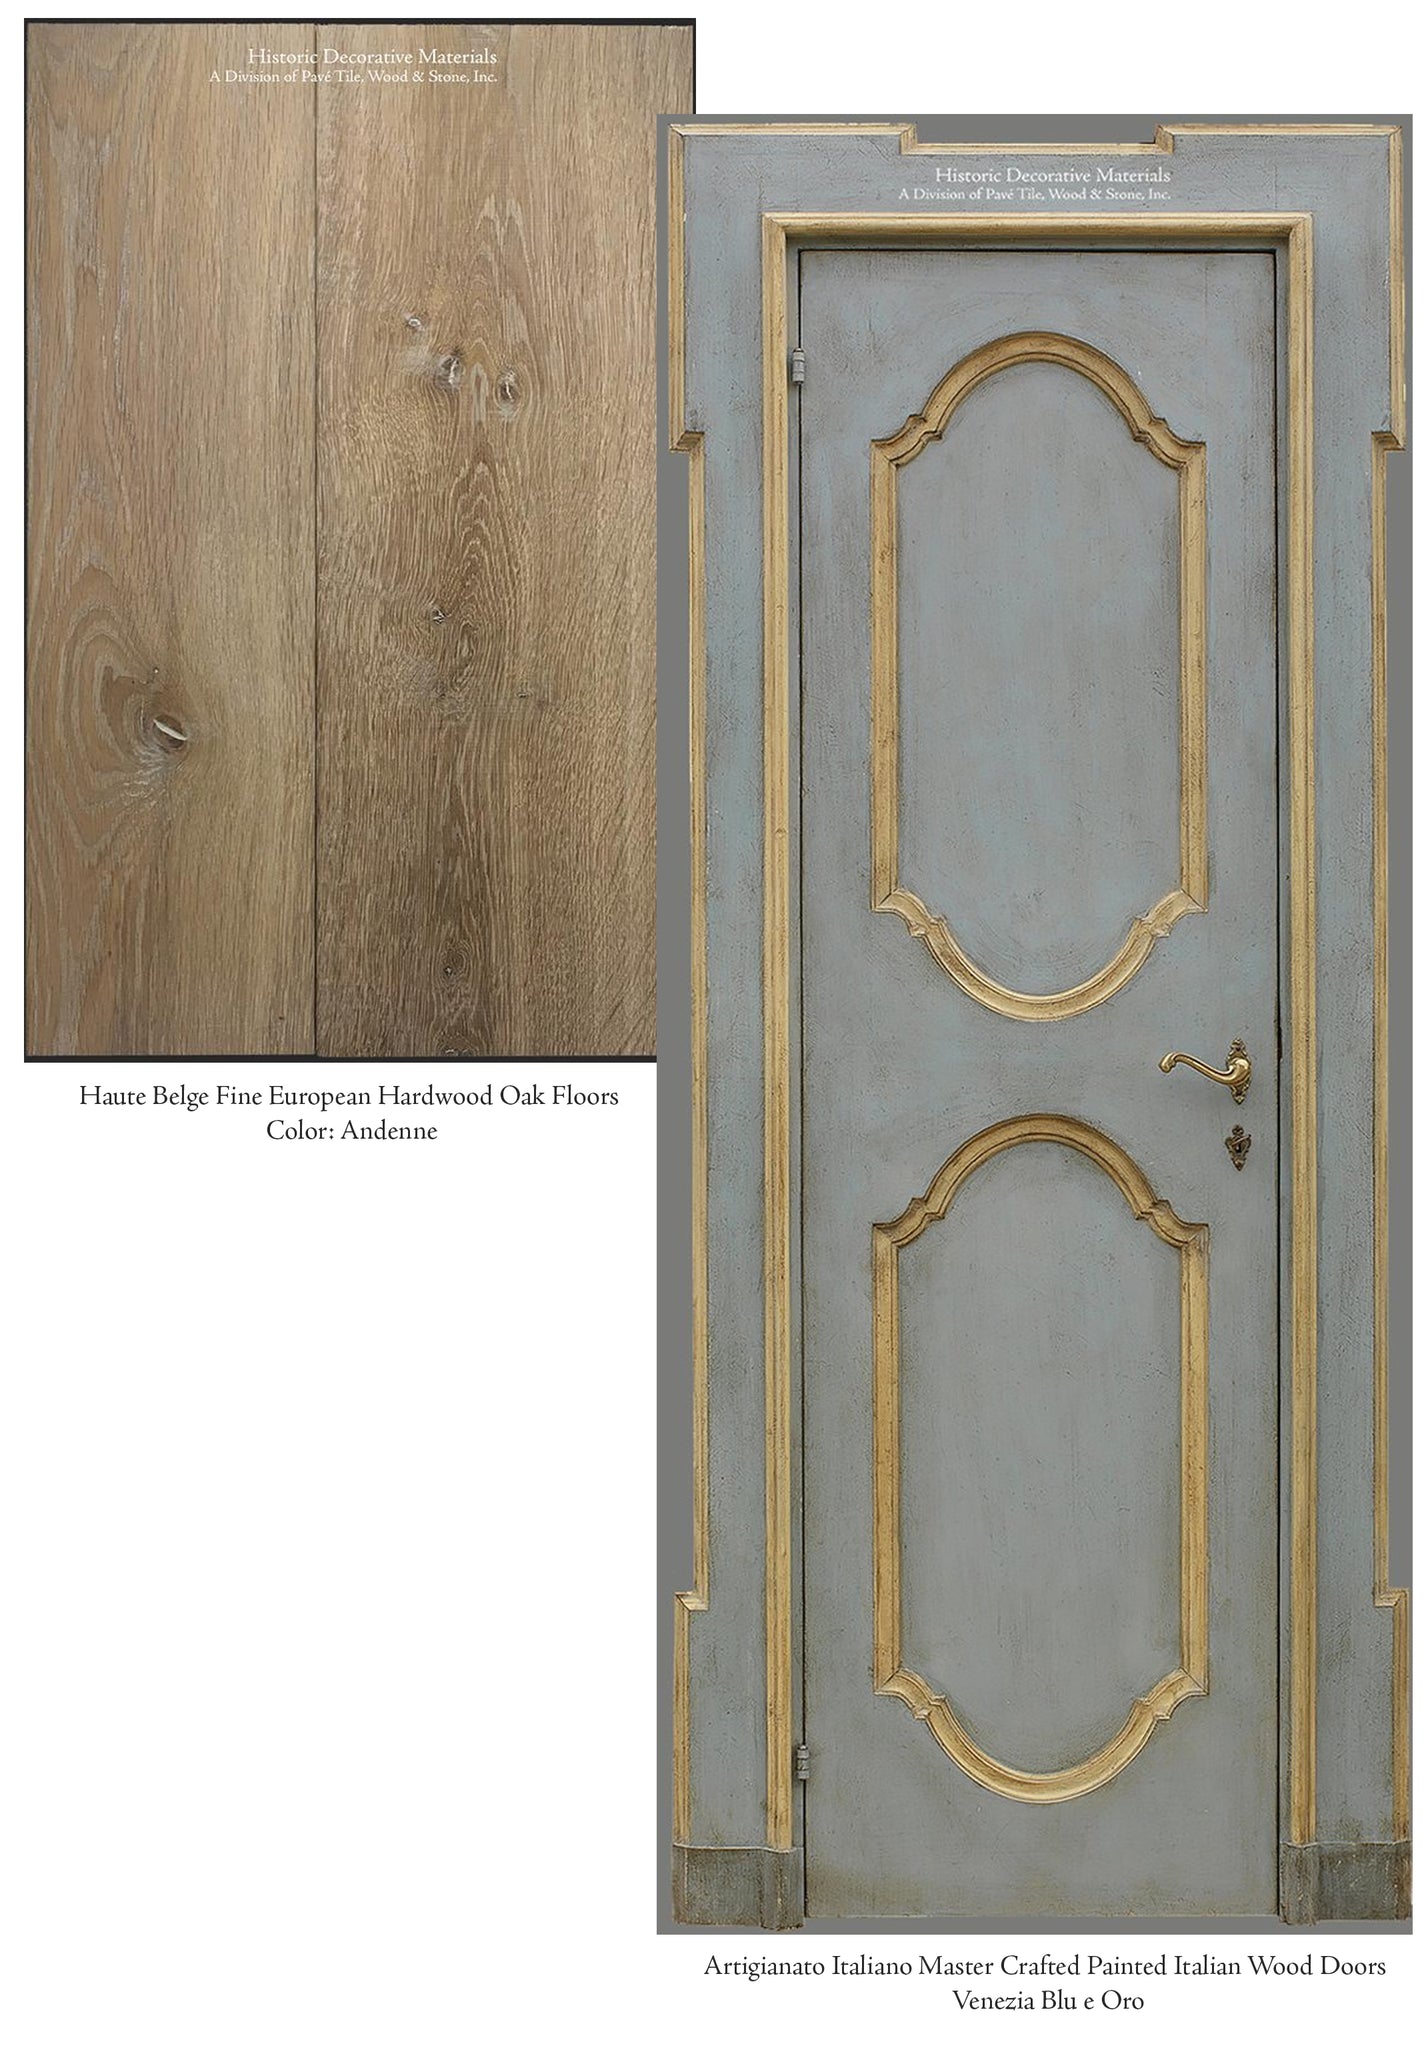 Haute Belge European Hardwood Oak Floors and Hand Painted Italian Doors